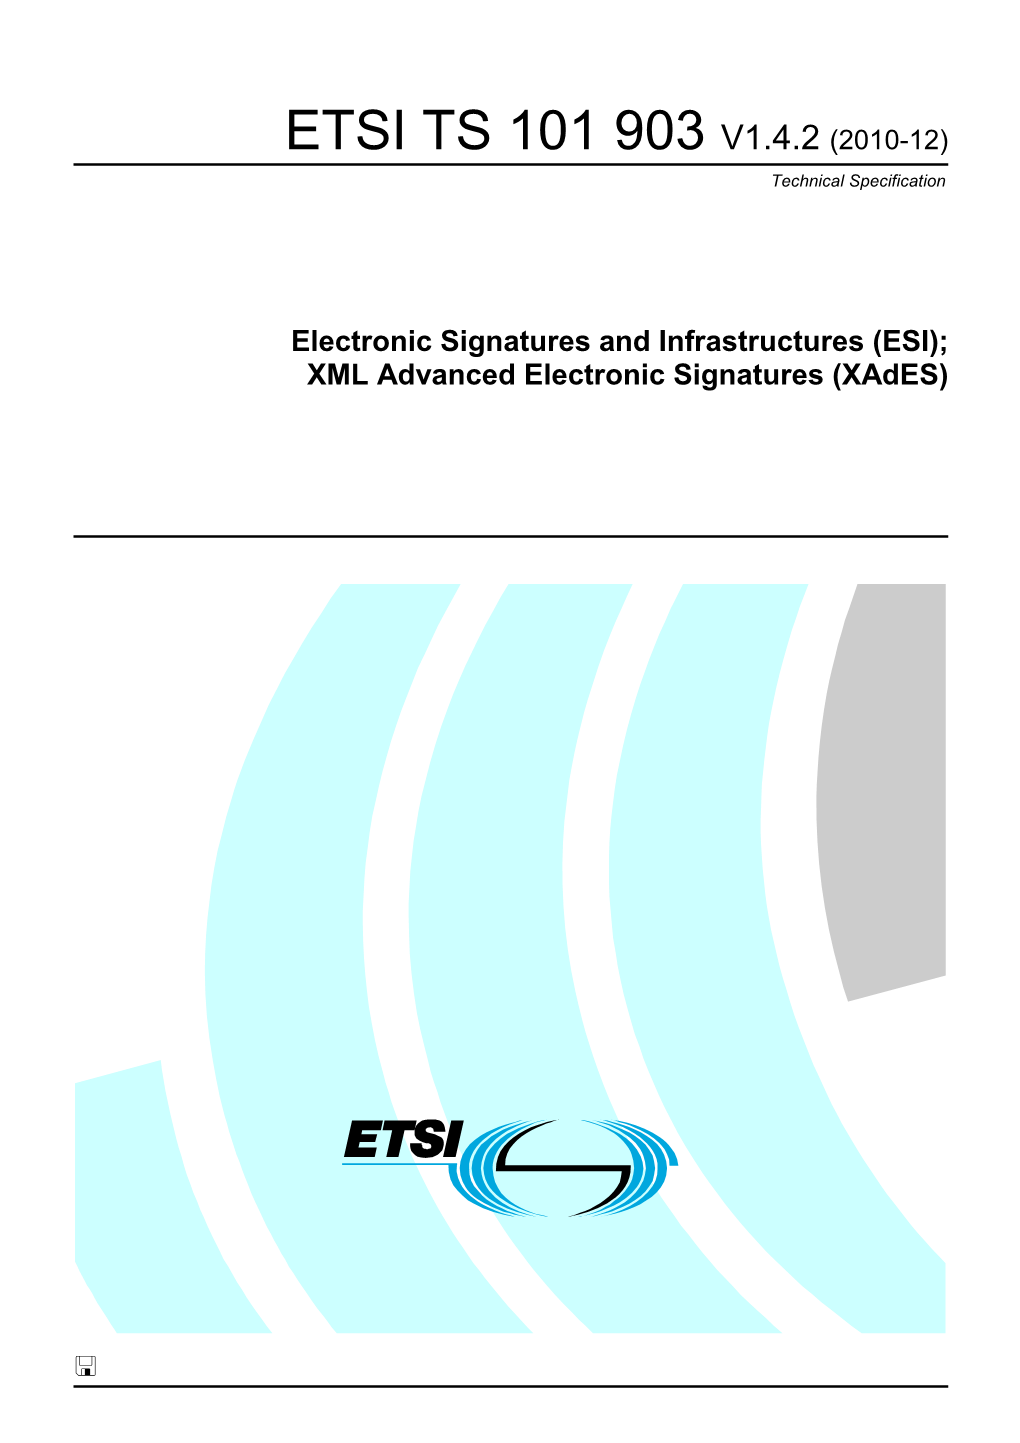 TS 101 903 V1.4.2 (2010-12) Technical Specification